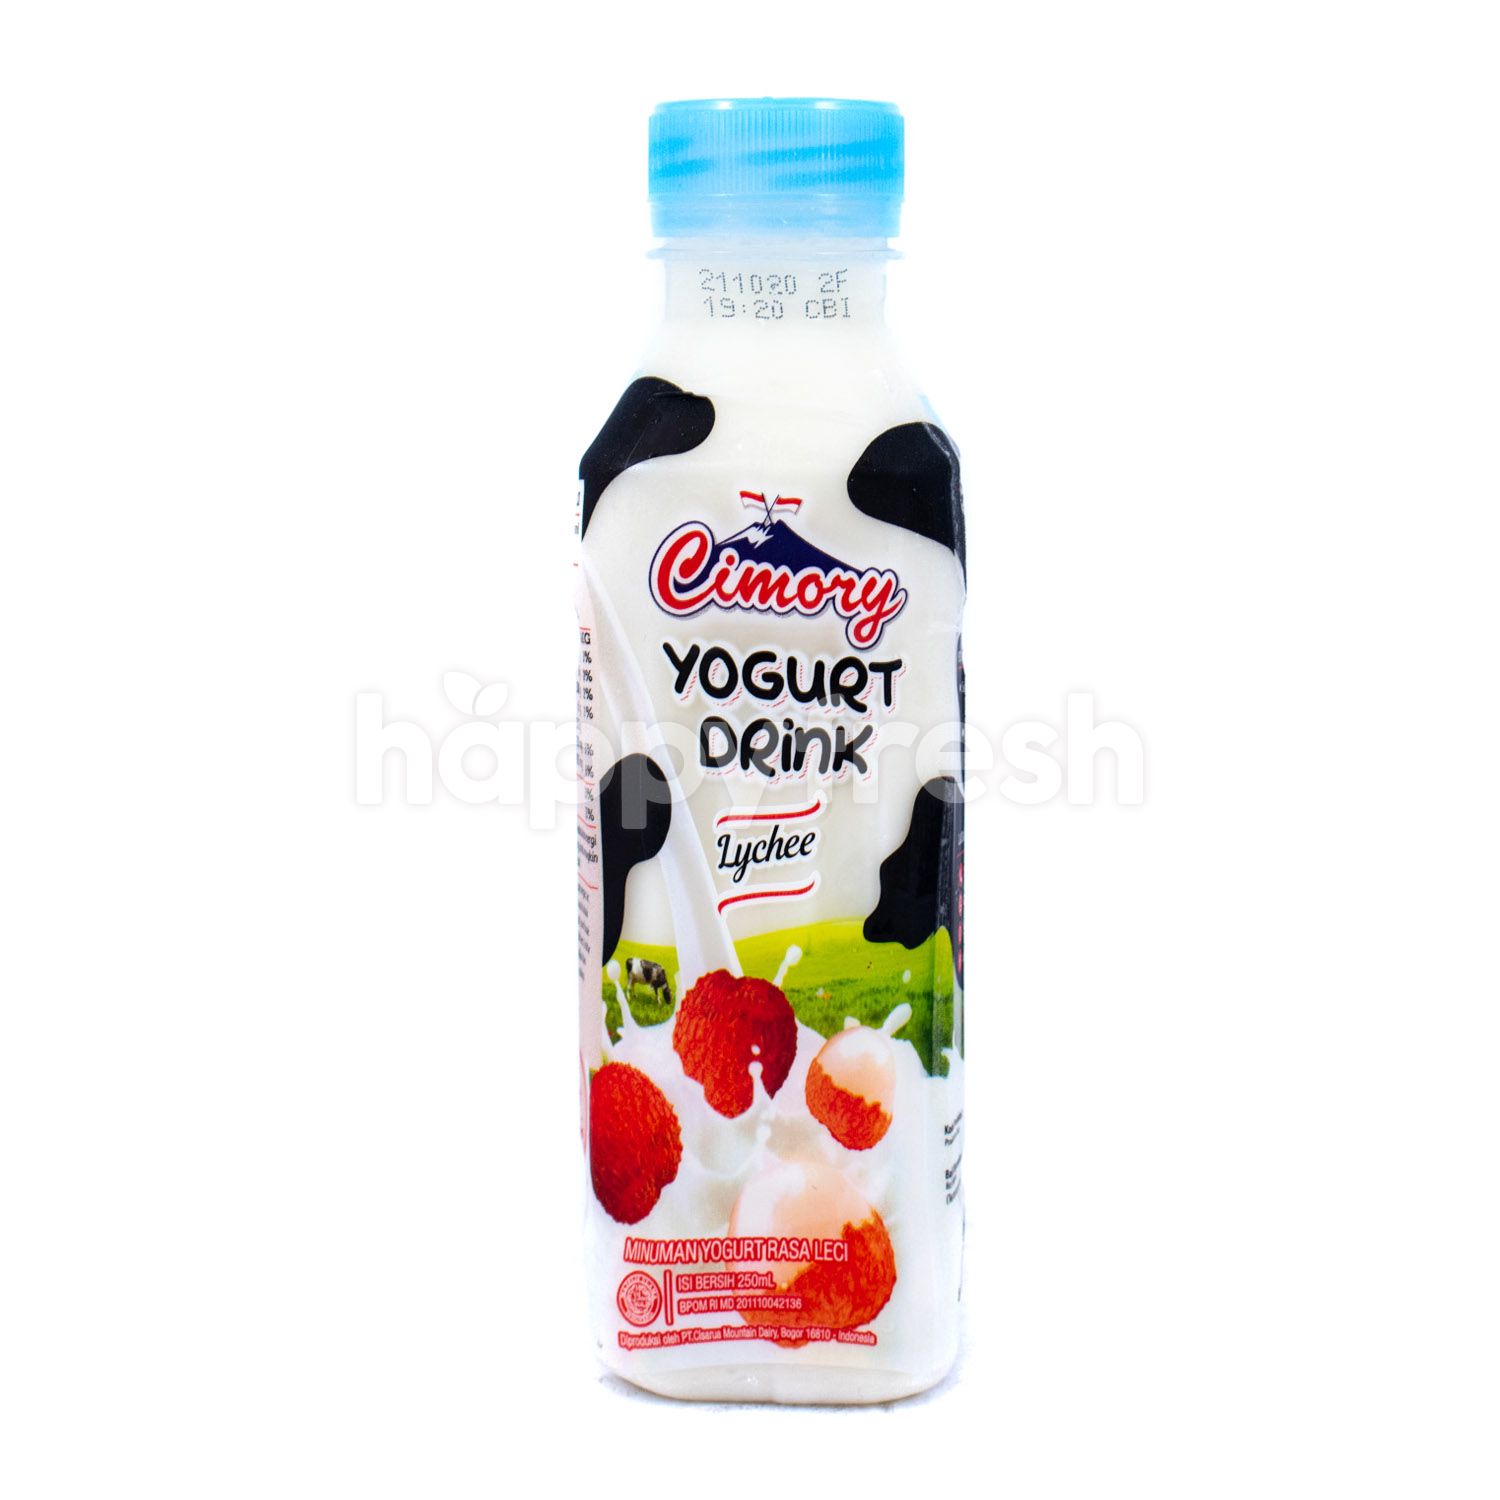 Harga cimory yogurt drink